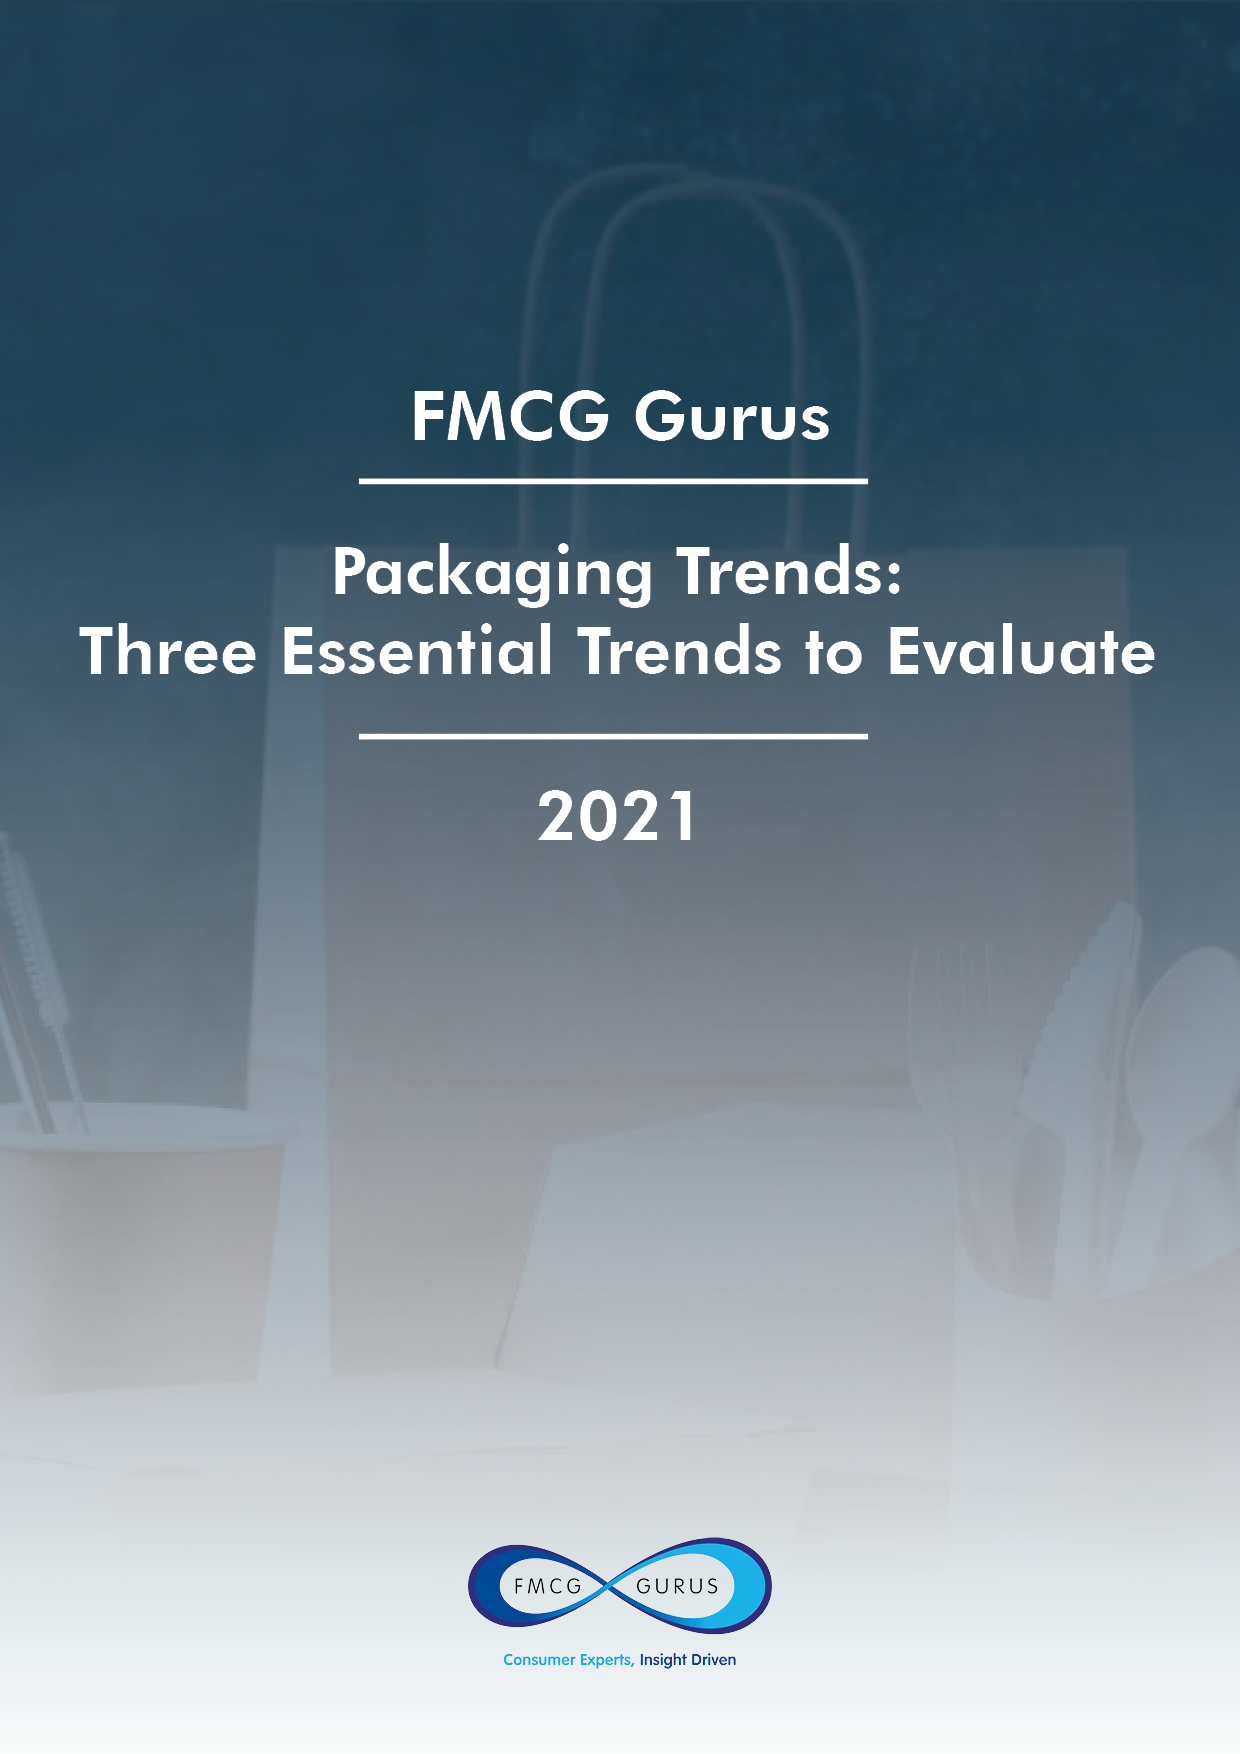 FMCG Gurus - Packaging Trends - Three Essential Trends to Evaluate